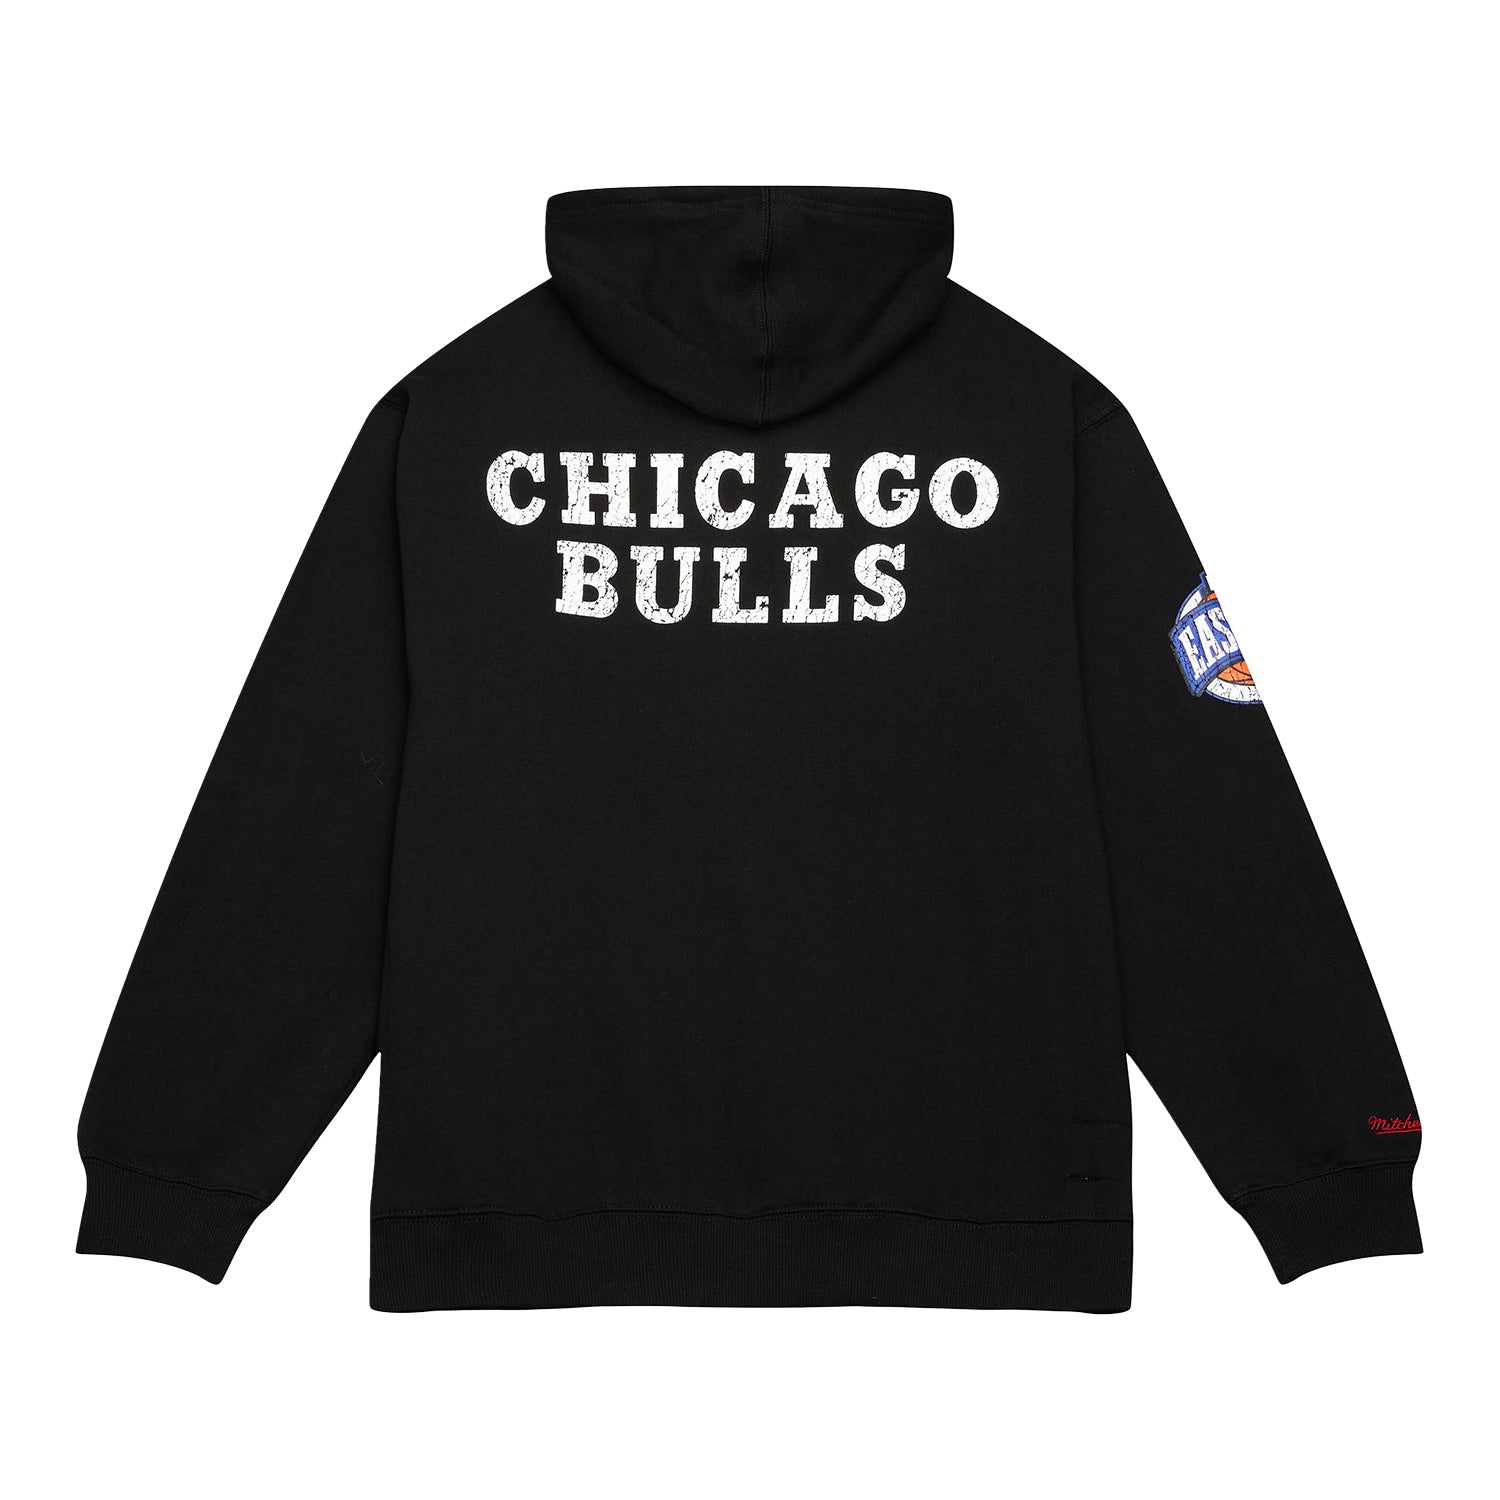 Chicago Bulls Mitchell & Ness Oversized Hooded Sweatshirt in black - back view